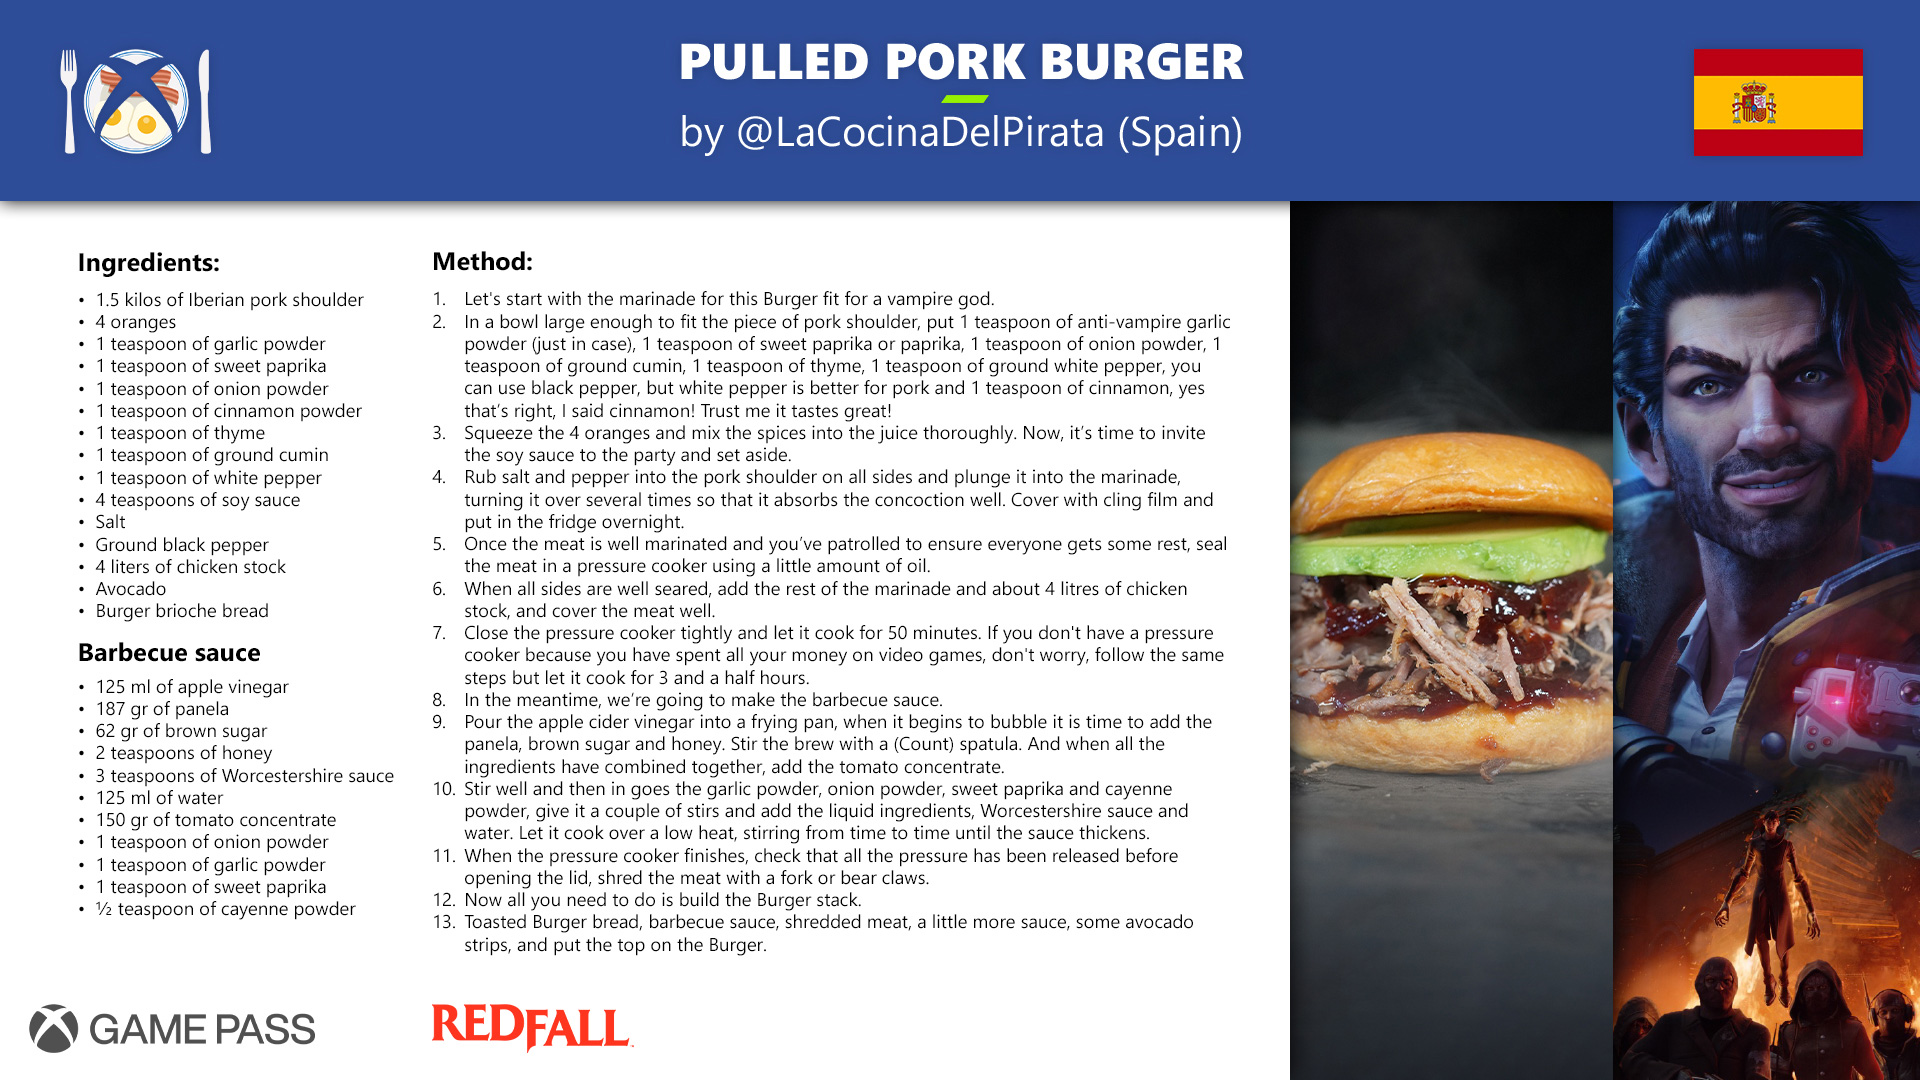 Game Pass Recipe - Redfall Pulled Pork Burger